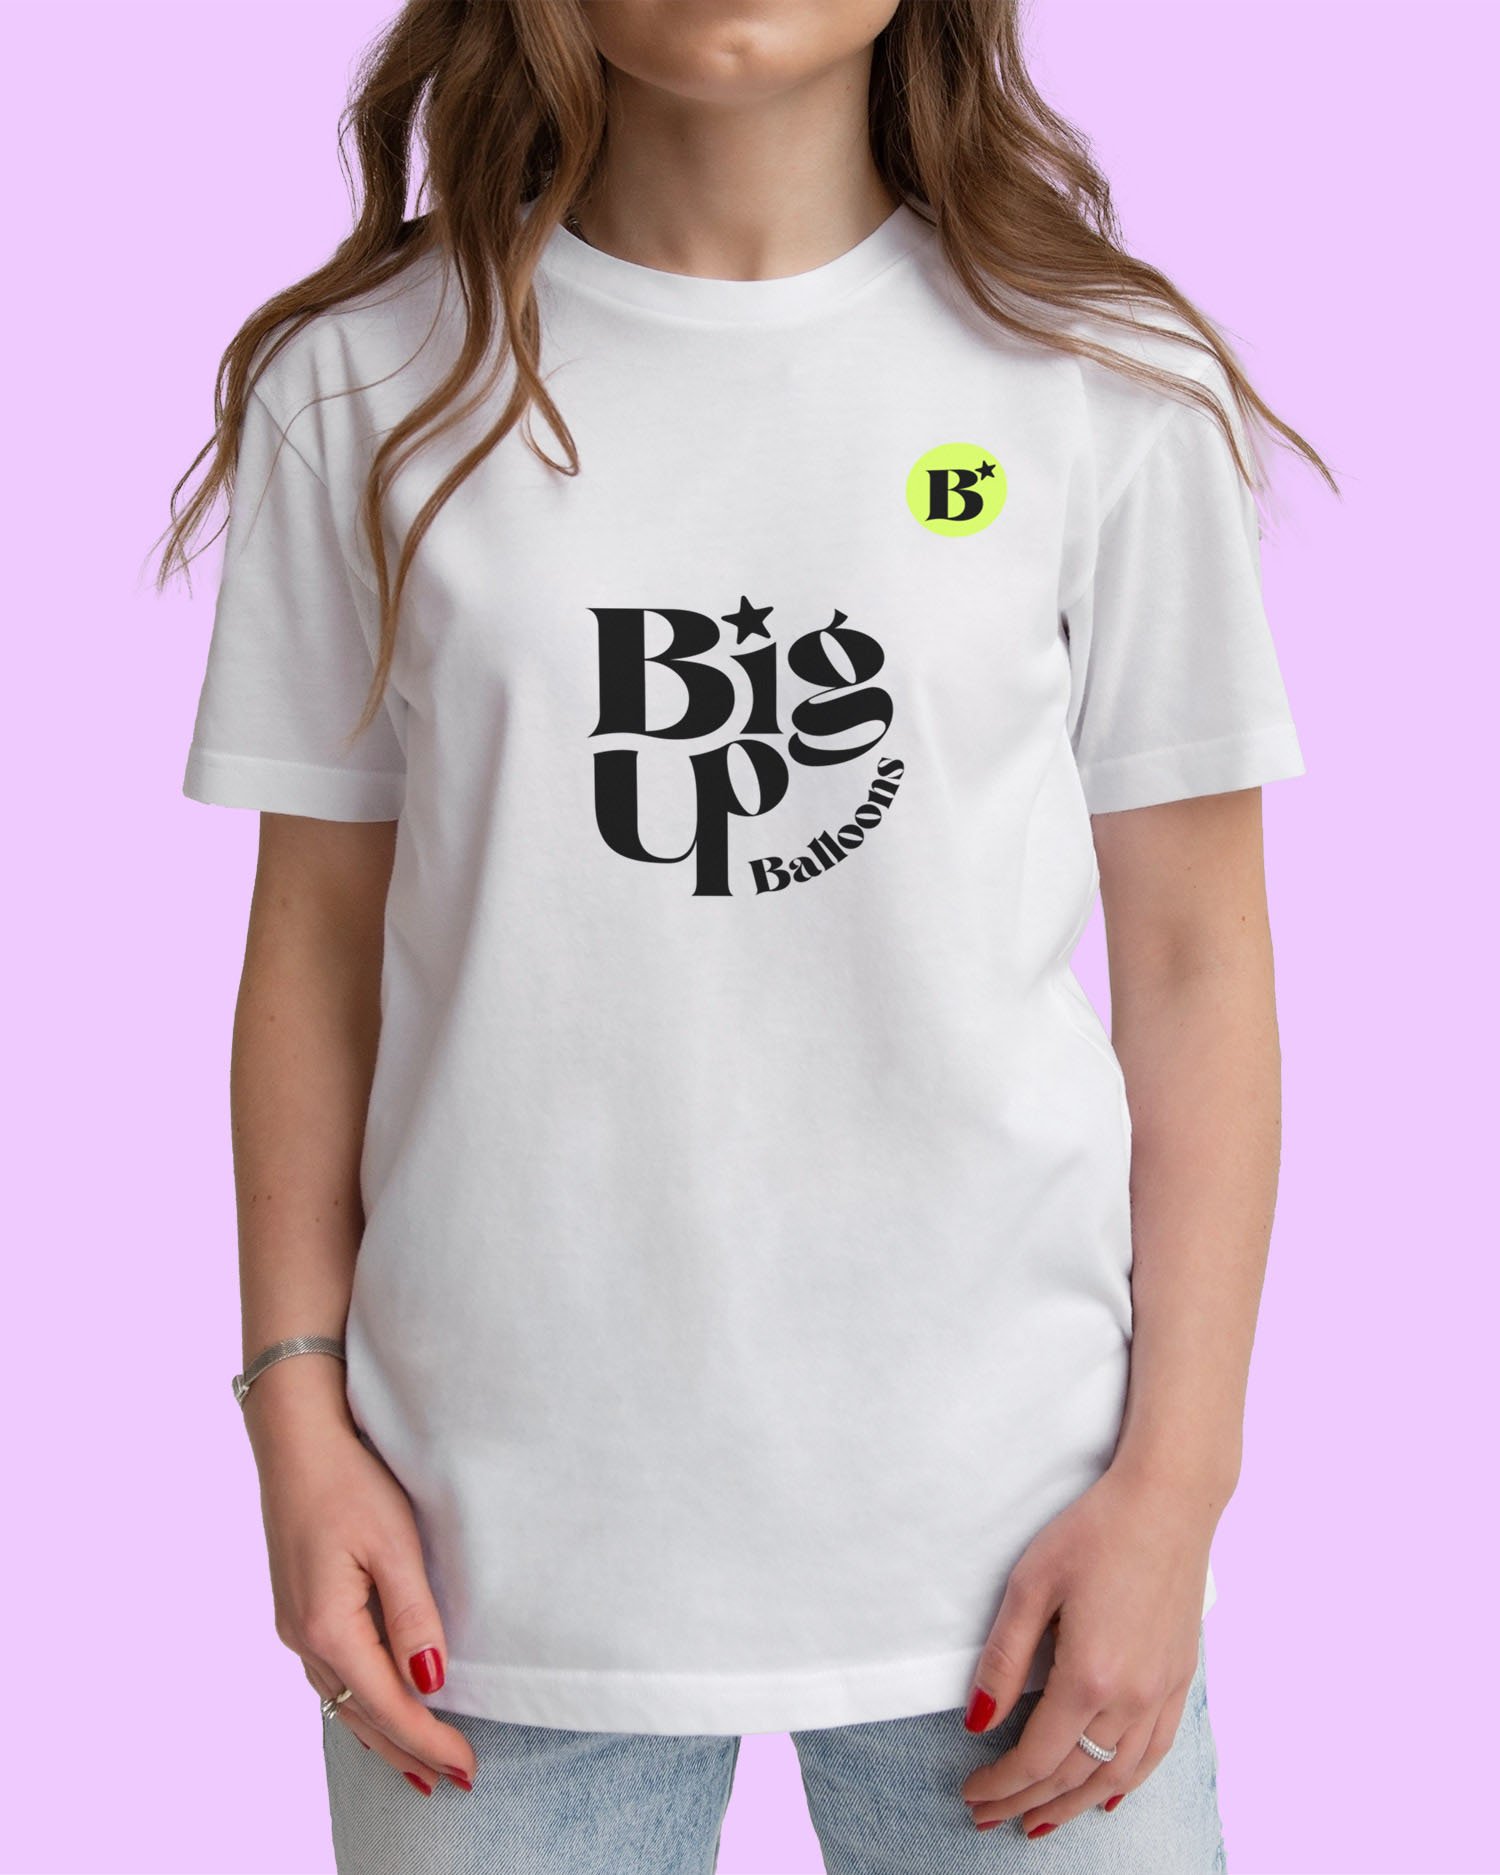 Big Up Balloons Events t shirt design Female Brands.jpg